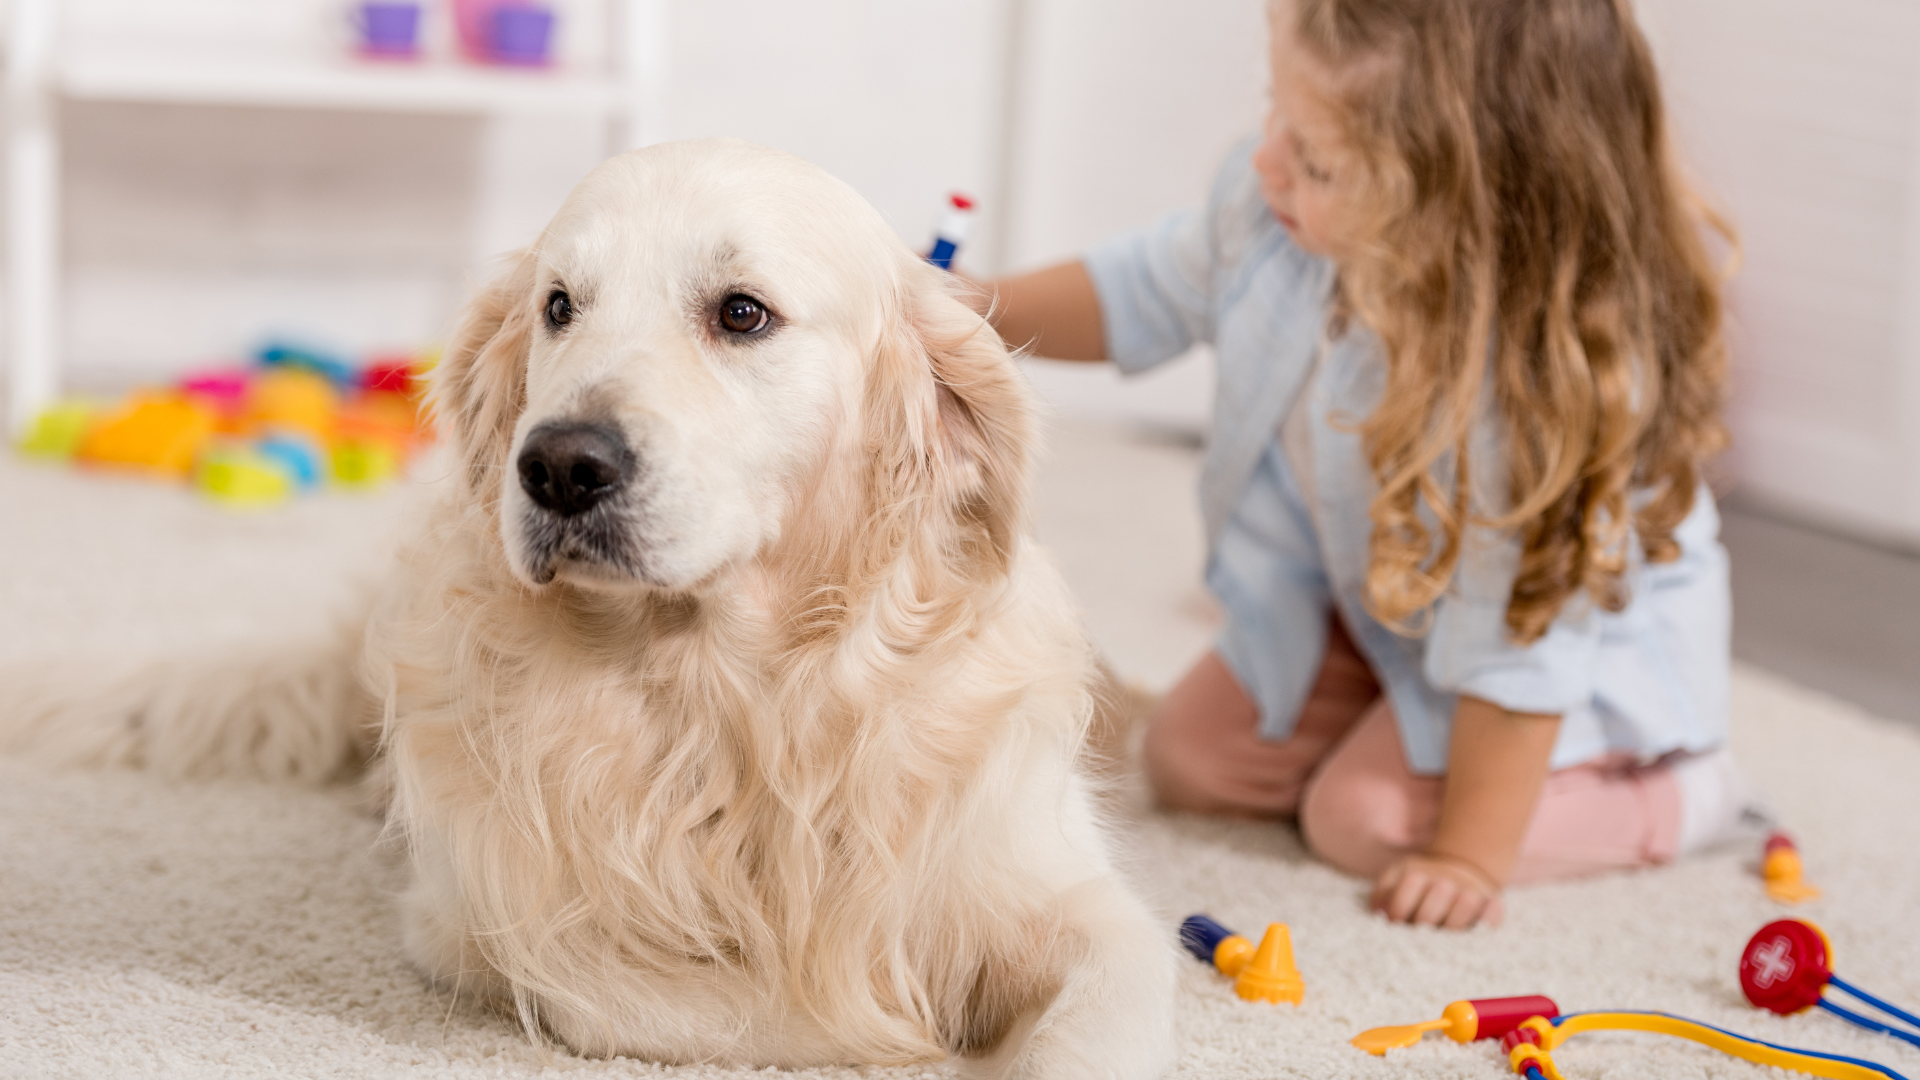 Teaching Responsibility Through Dog Care Tasks